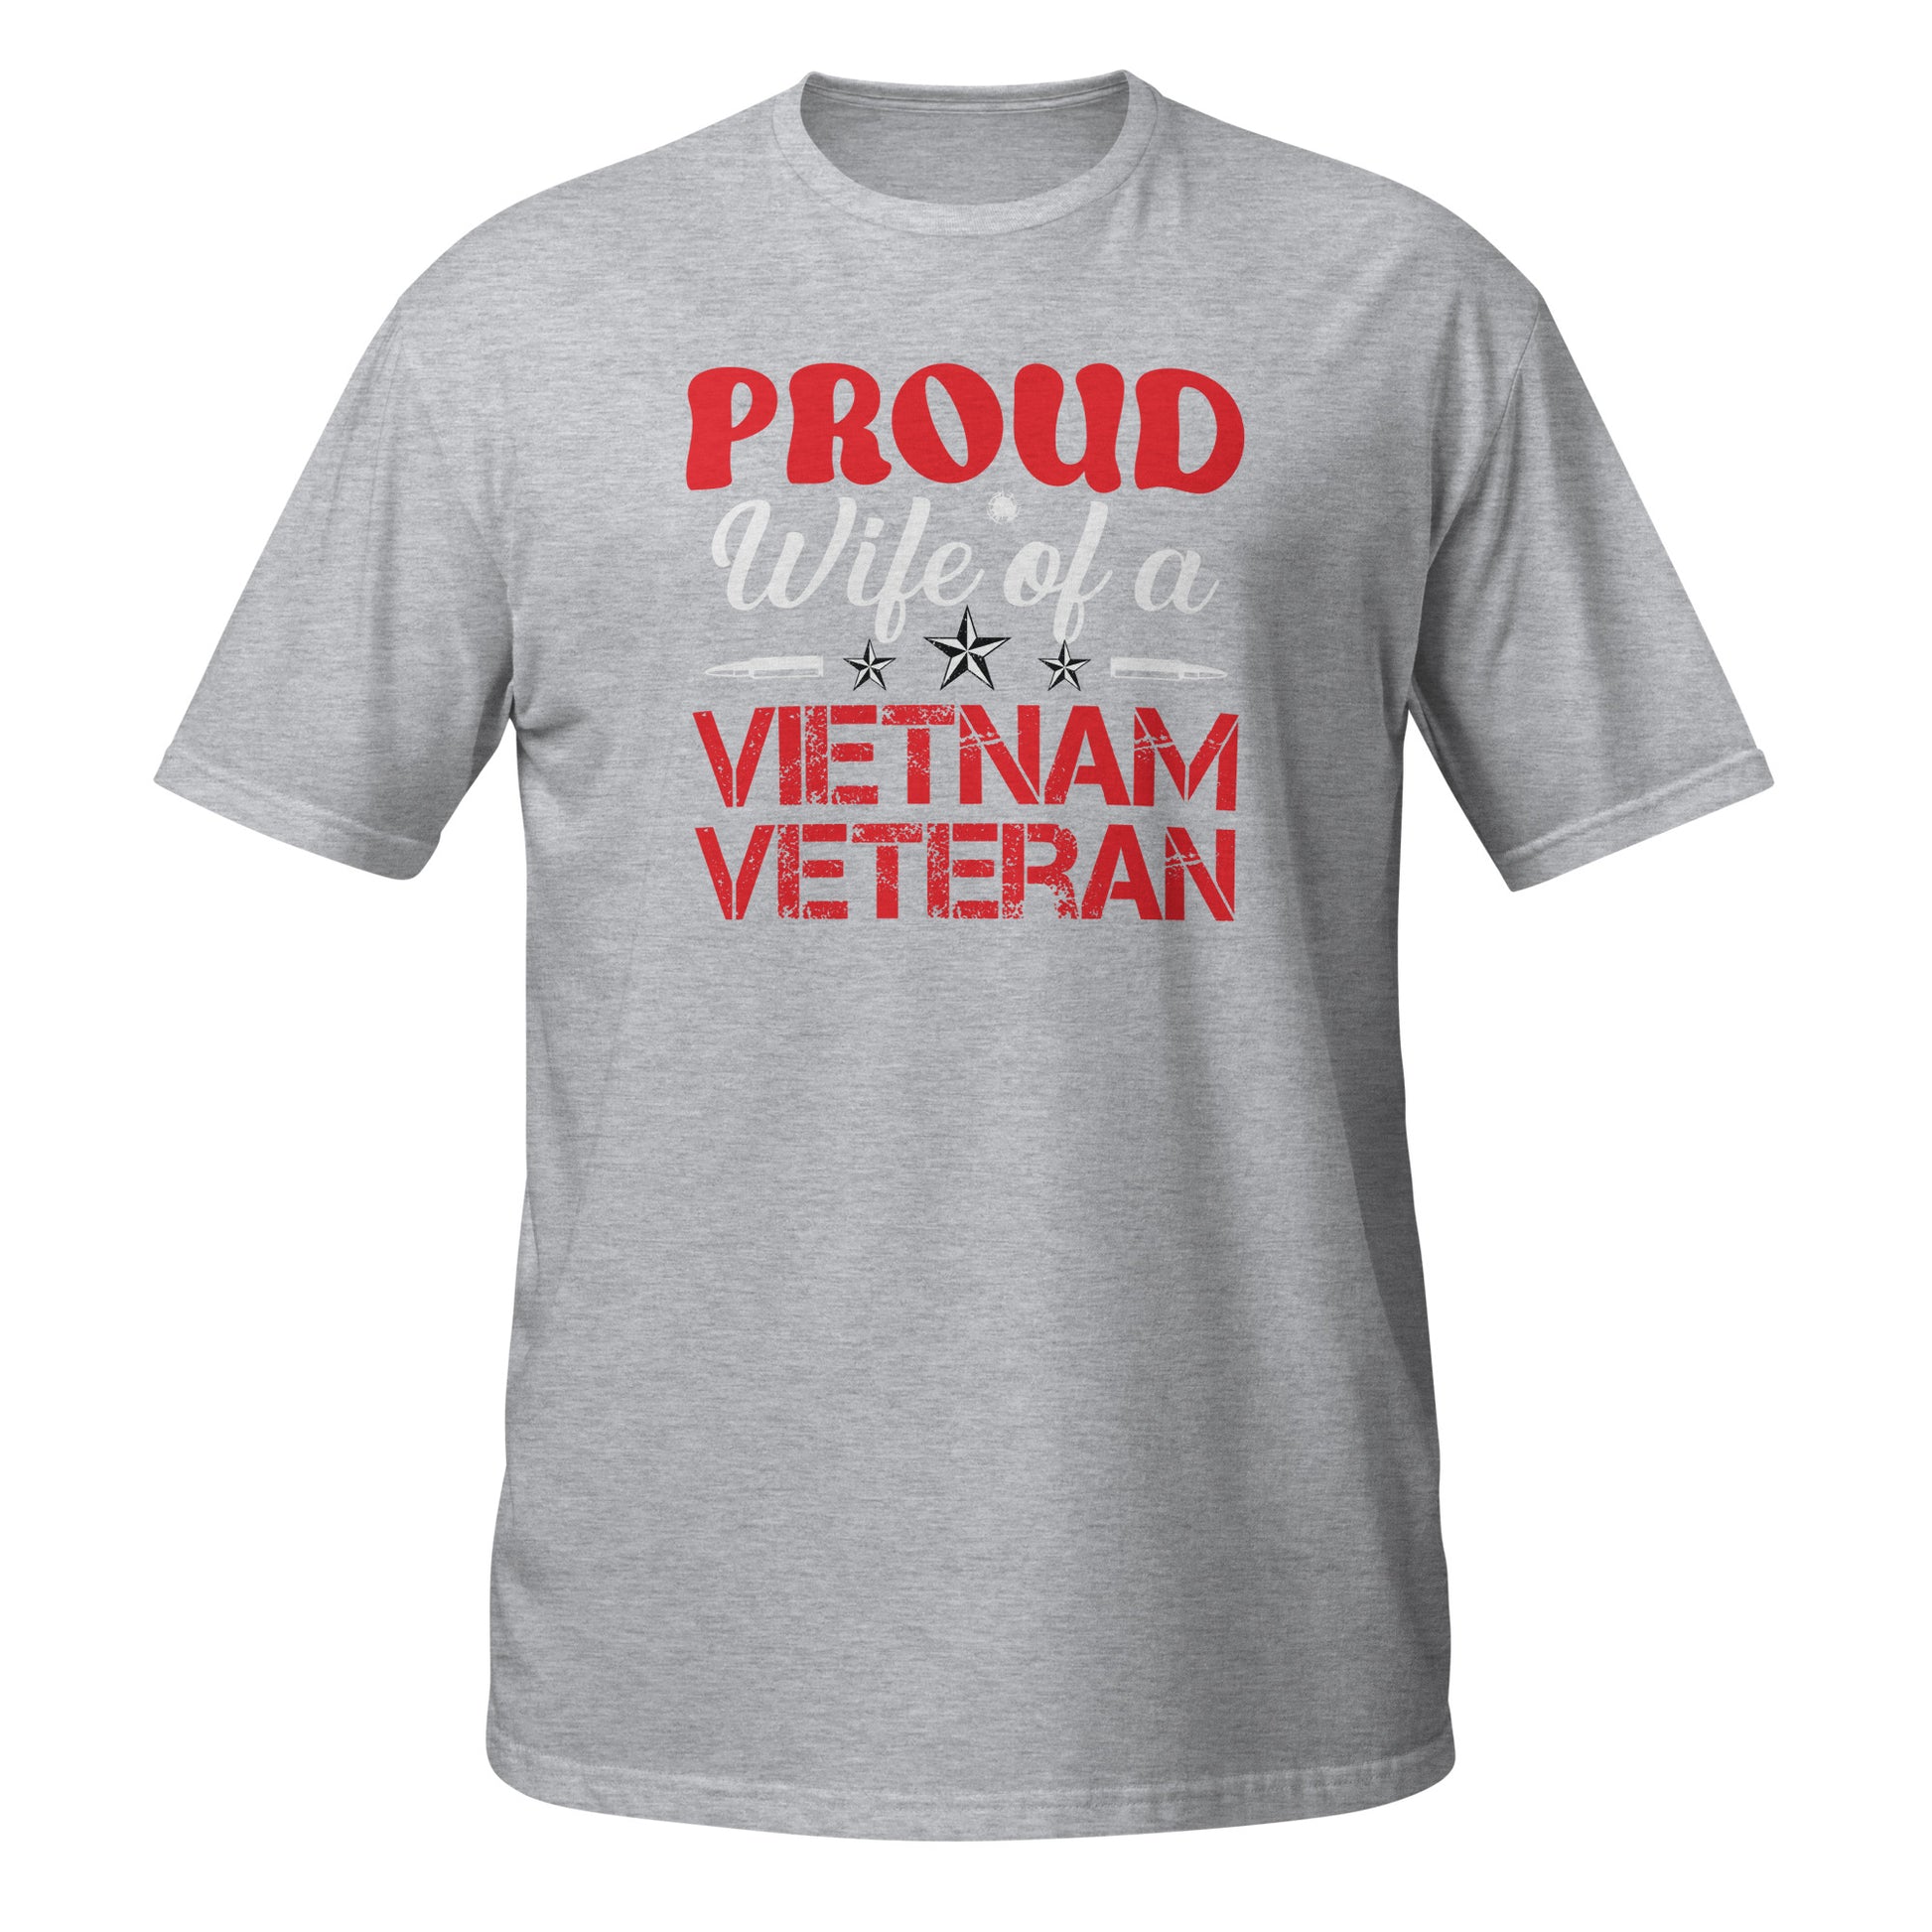 Proud Wife Of A Vietnam Veteran T-Shirt, Grey Color